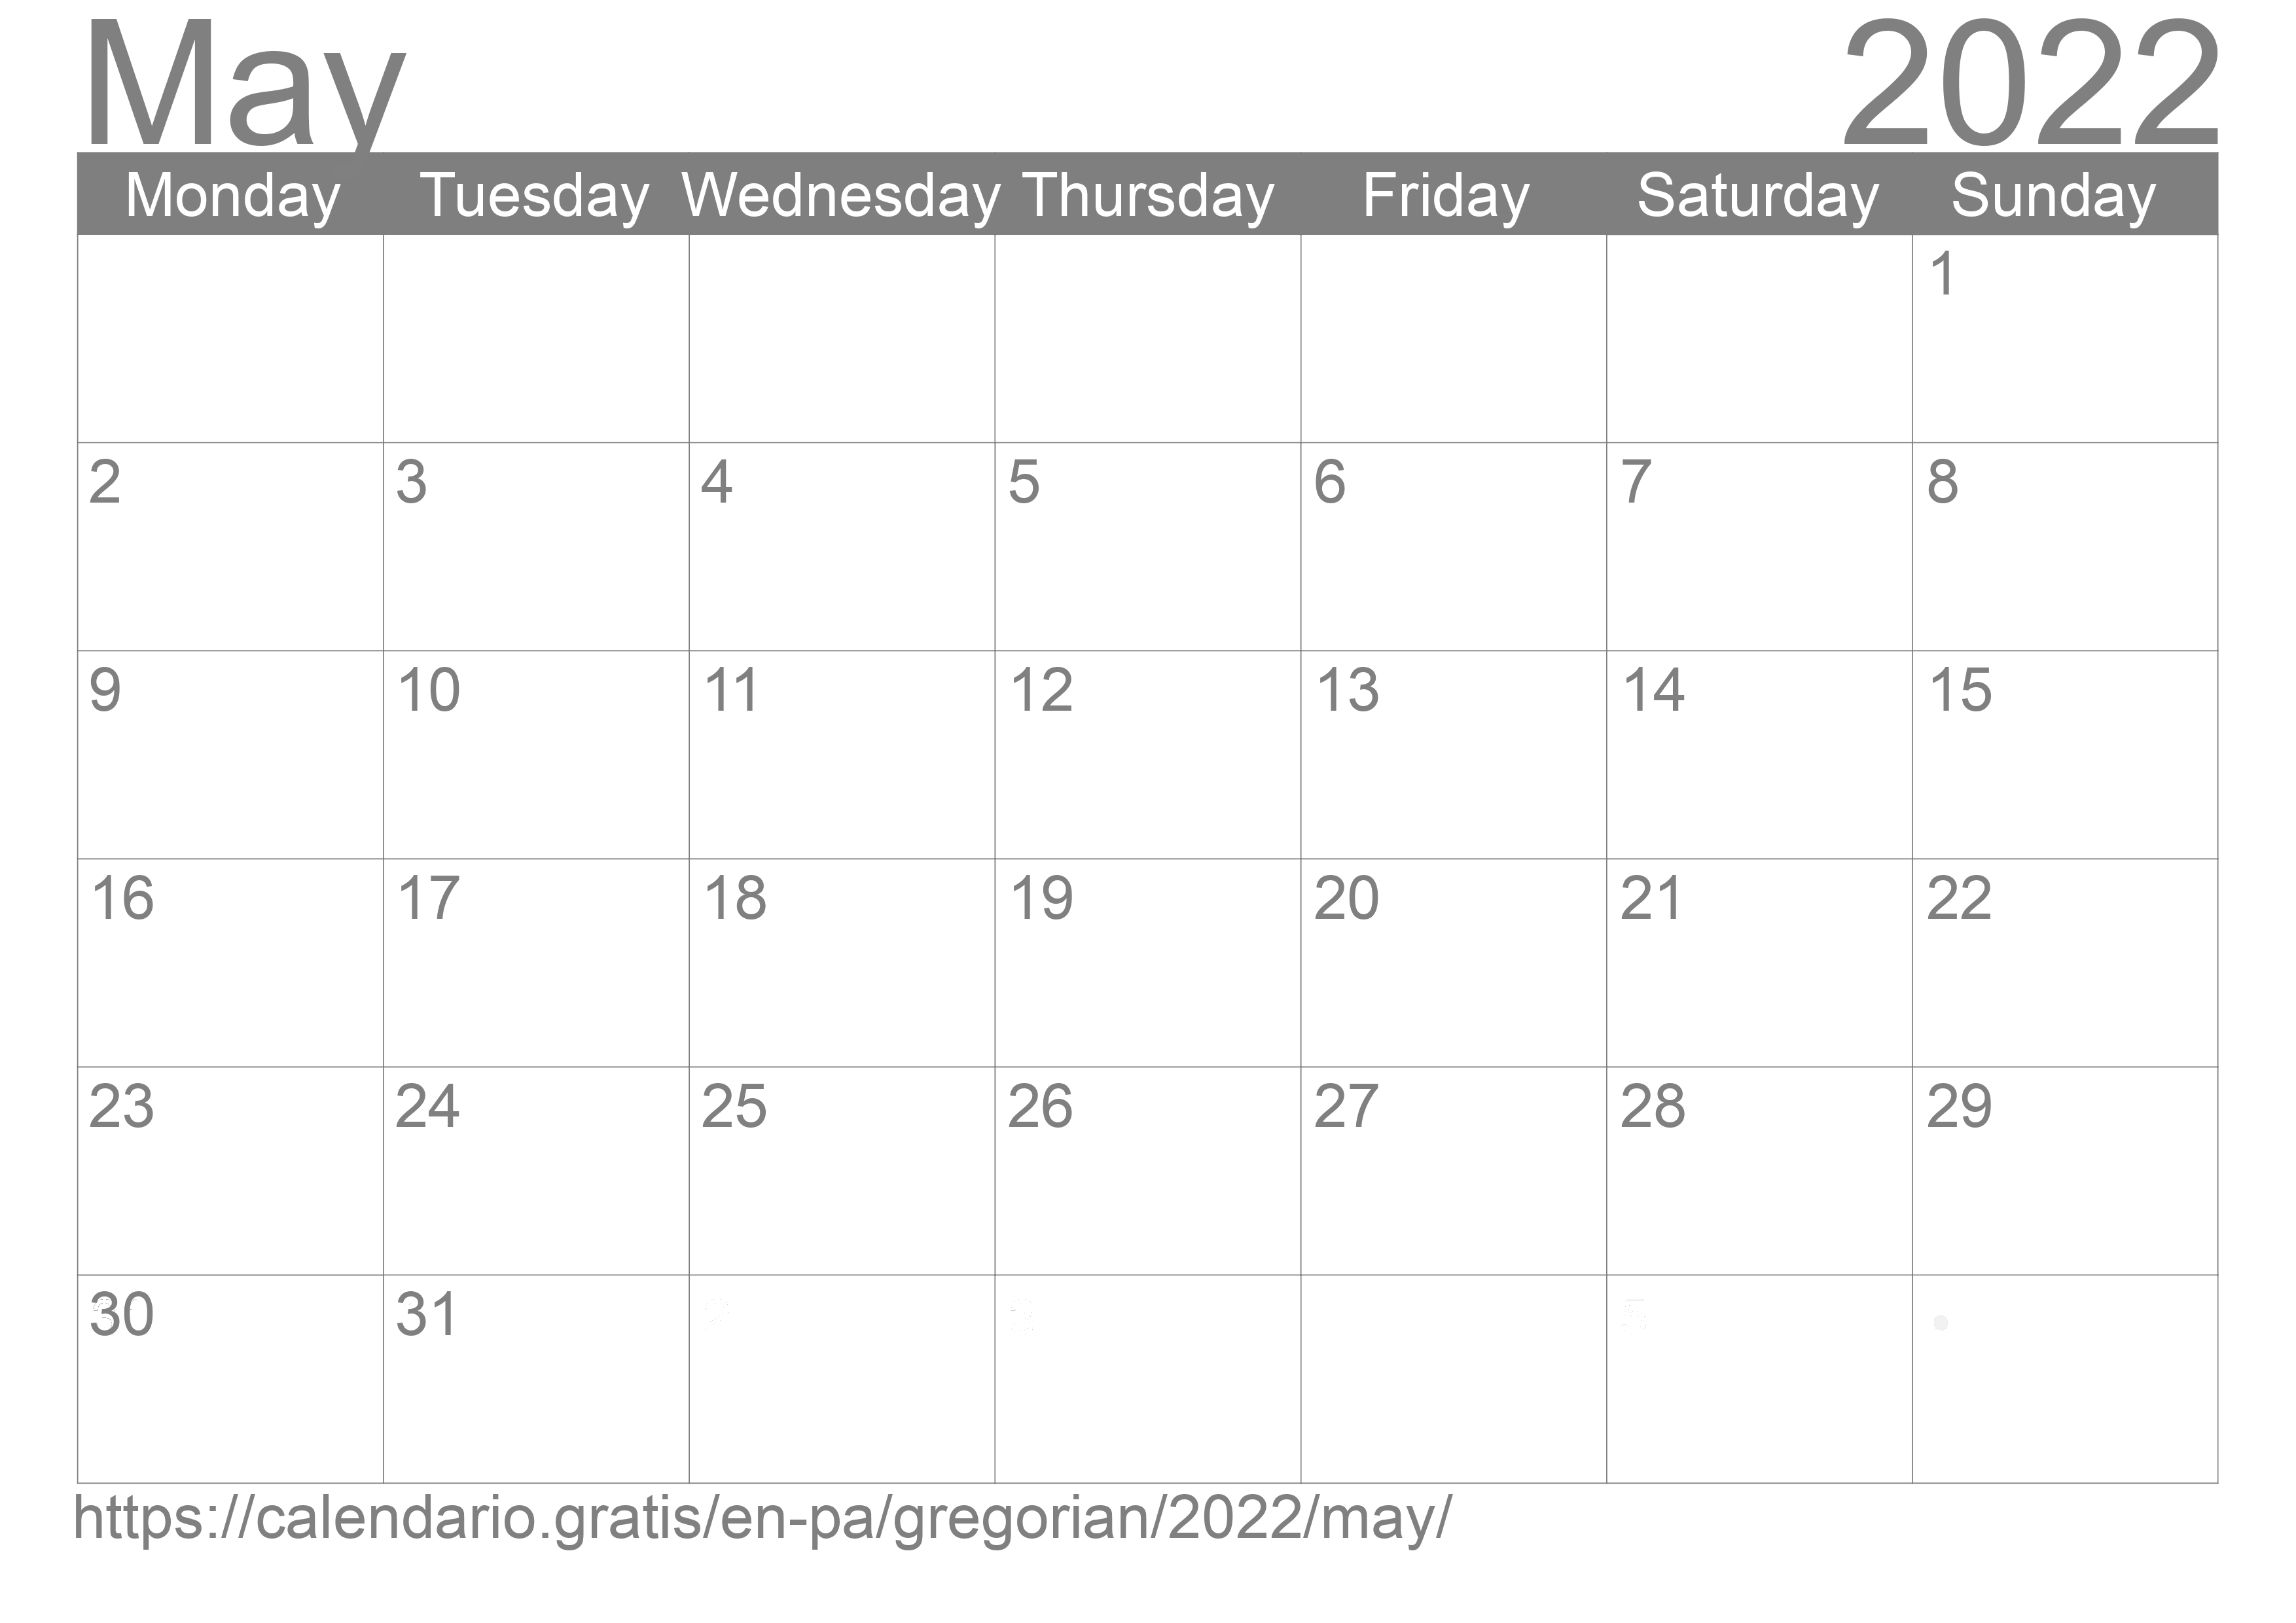 Calendar May 2022 to print